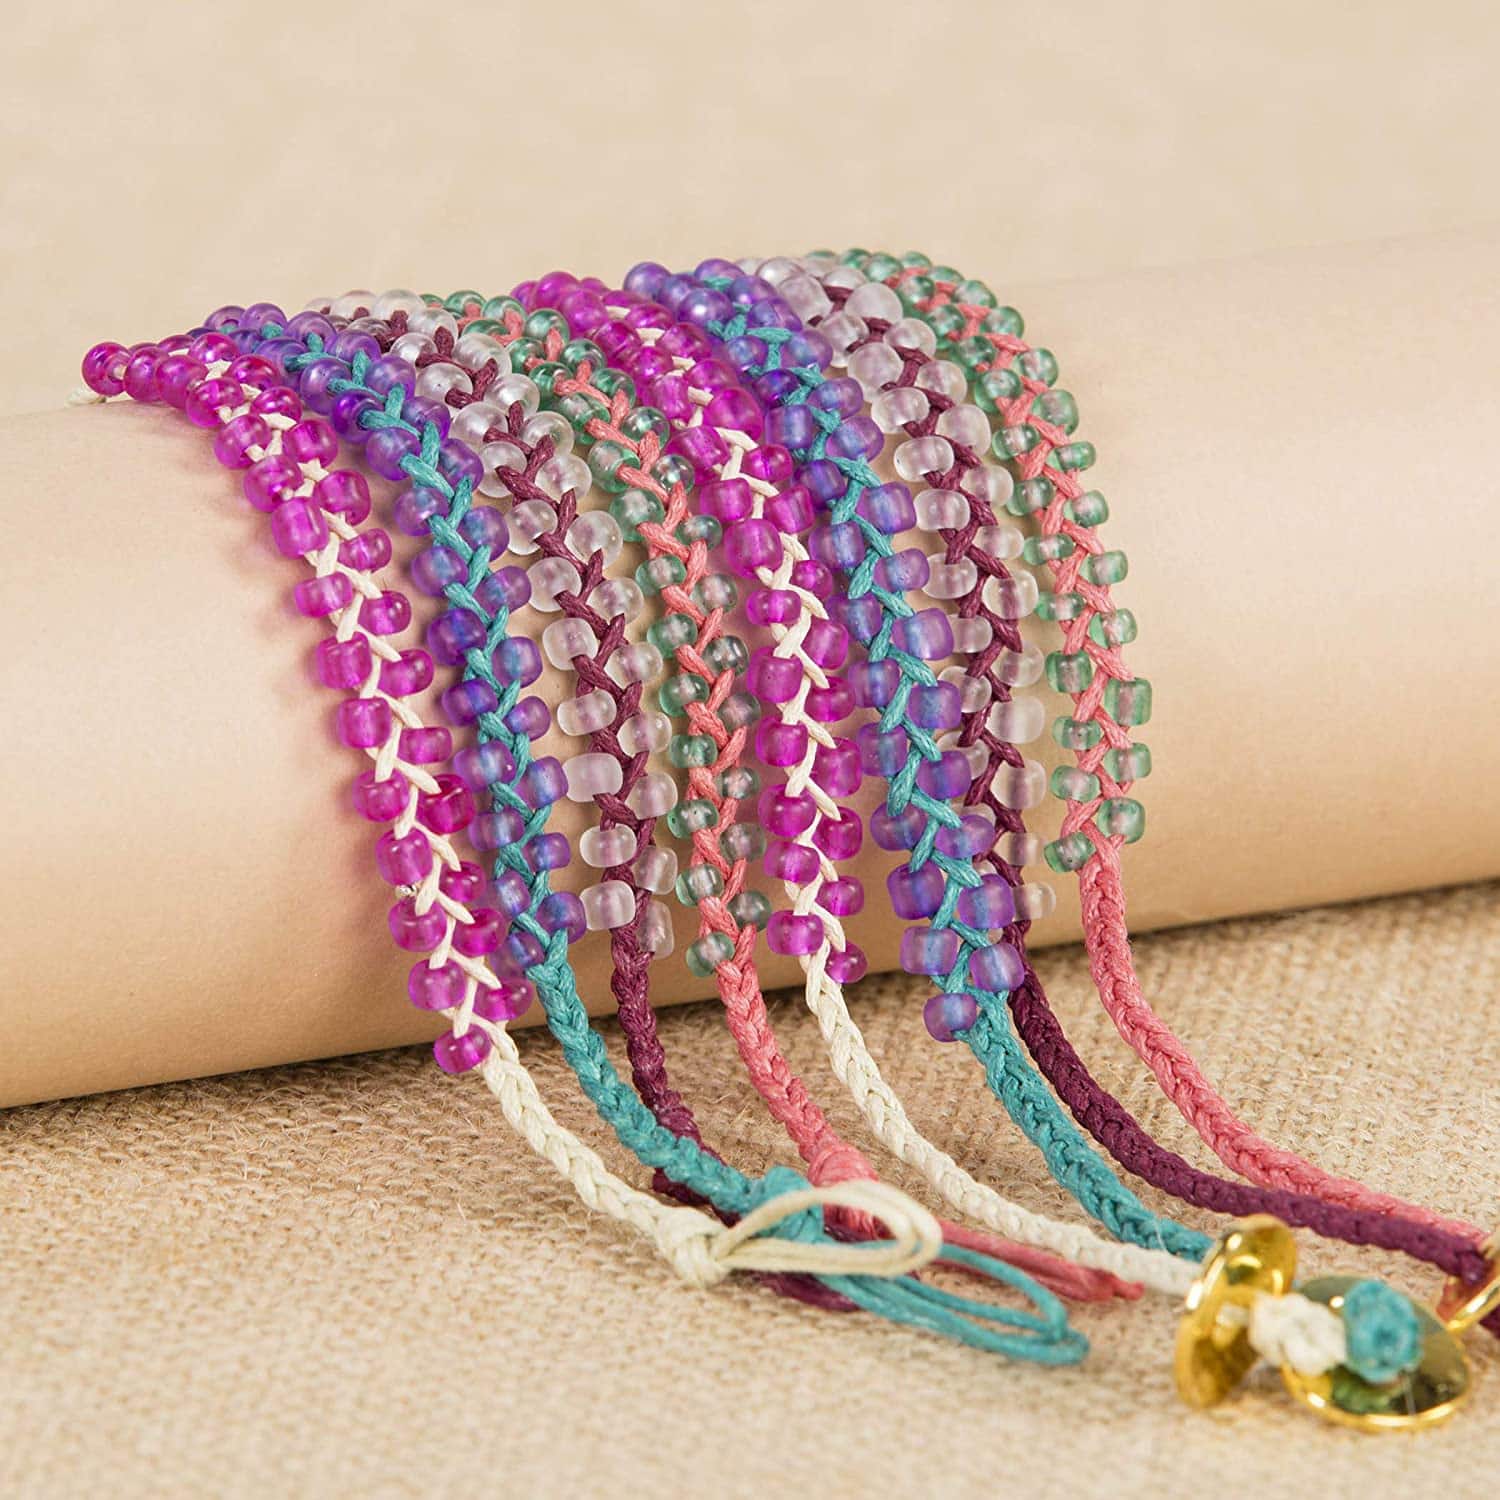 Craftabelle - Seed Bead Creation Kit - Bracelet & Necklace Making Kit – The  Kids Avenue